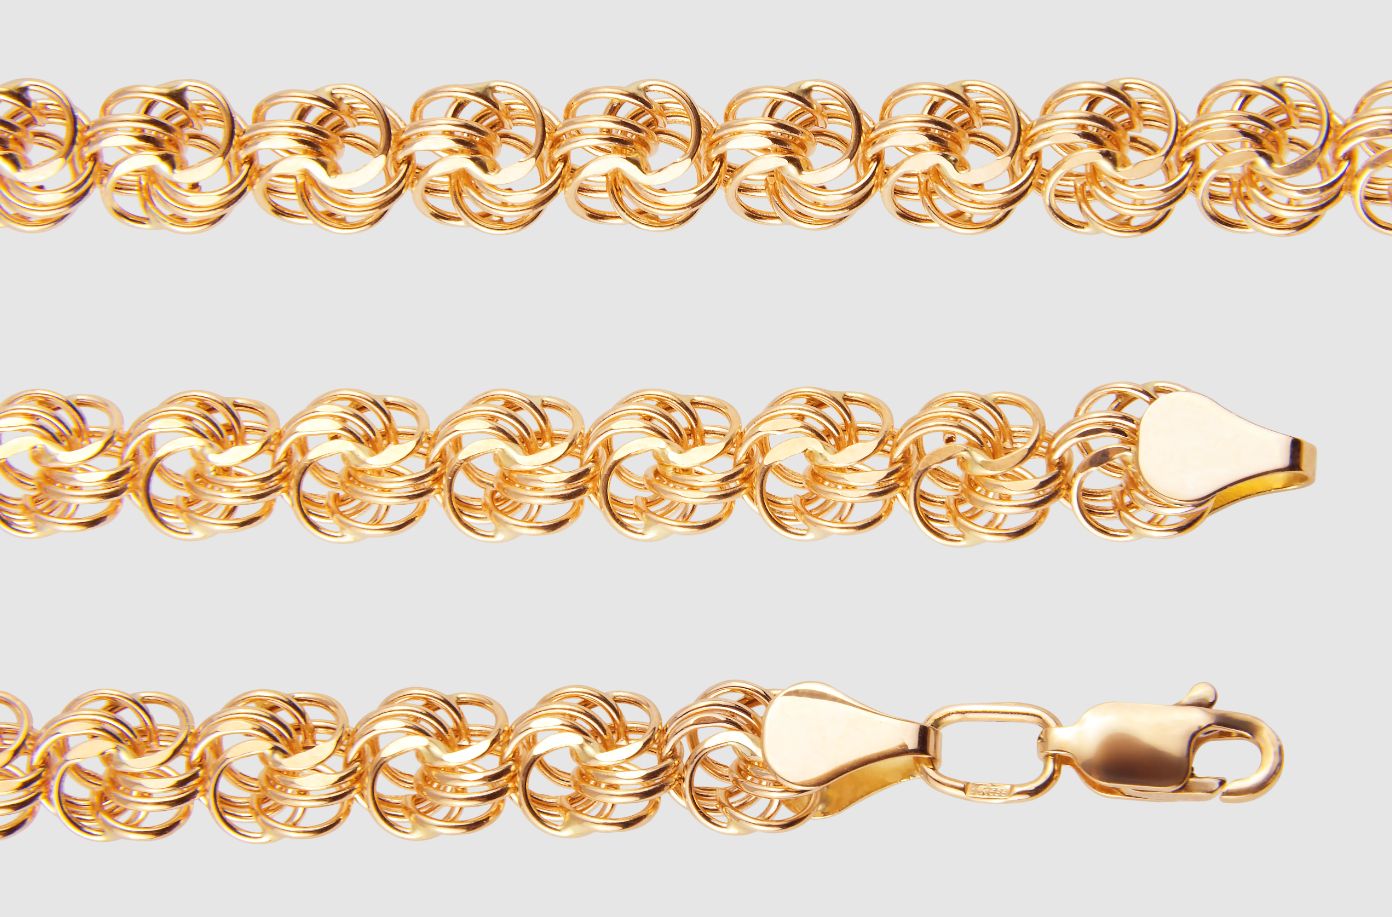 Розочка плетение золотой цепочки